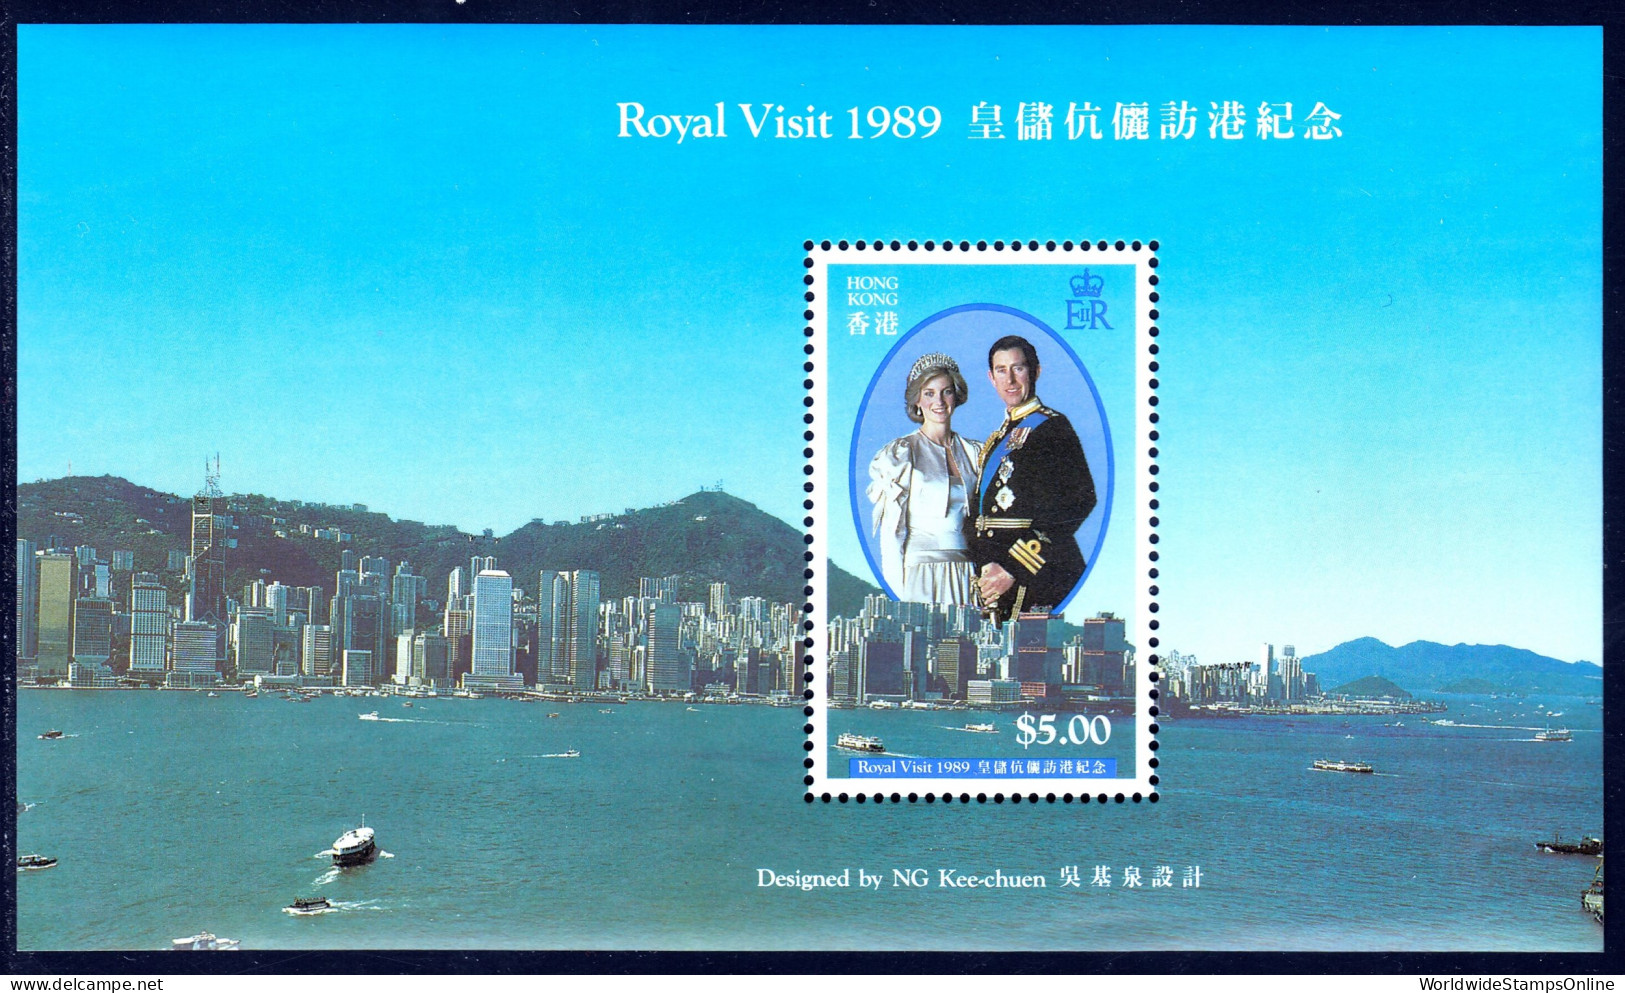 Hong Kong - Scott #559a - MNH - SCV $17.50 - Nuevos